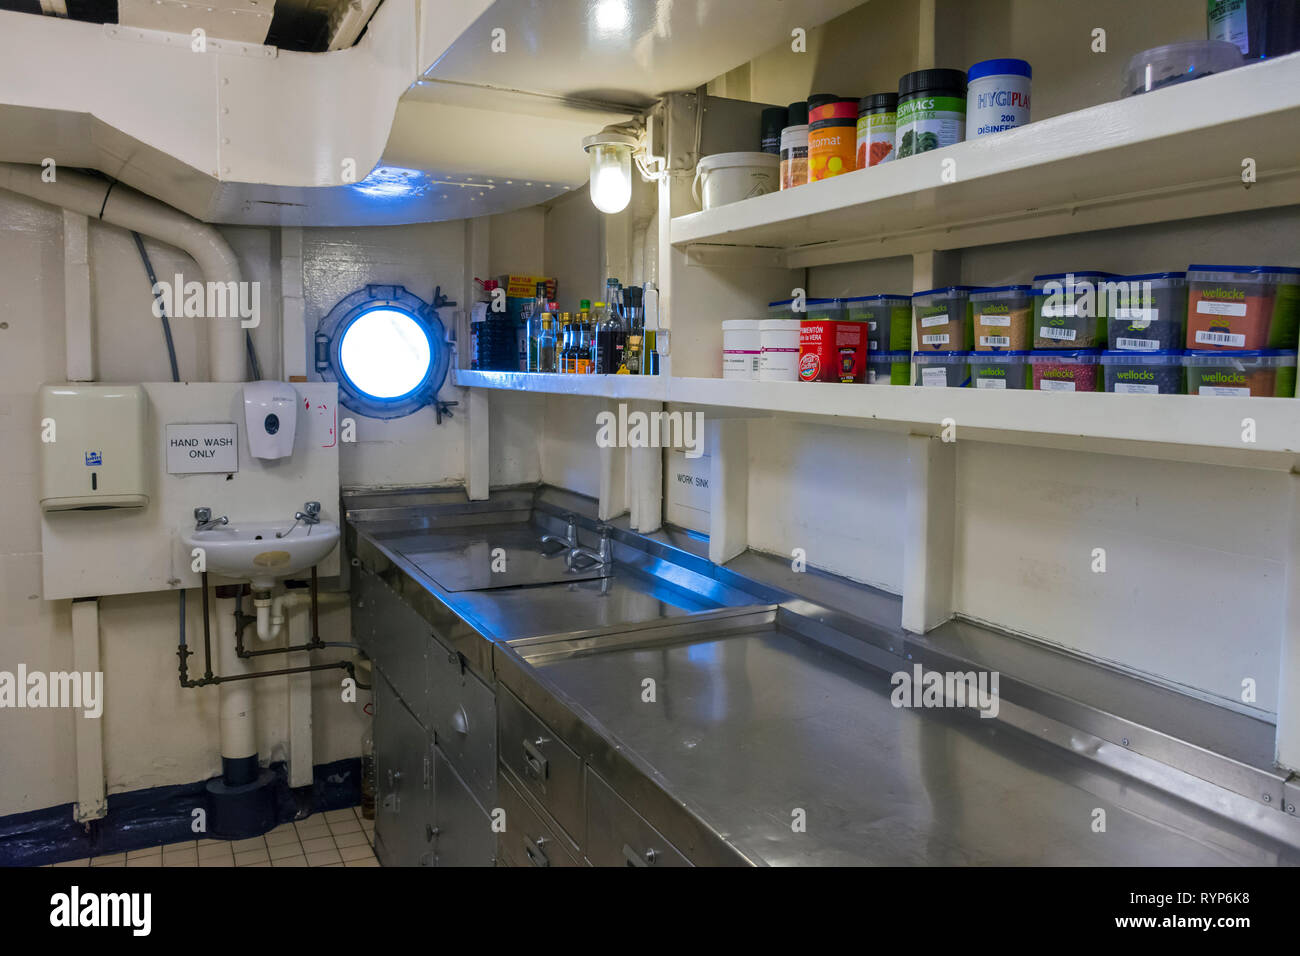 Part of the Galley (kitchen) area of the Royal Yacht Britannia, Port of Leith, Edinburgh, Scotland, UK Stock Photo